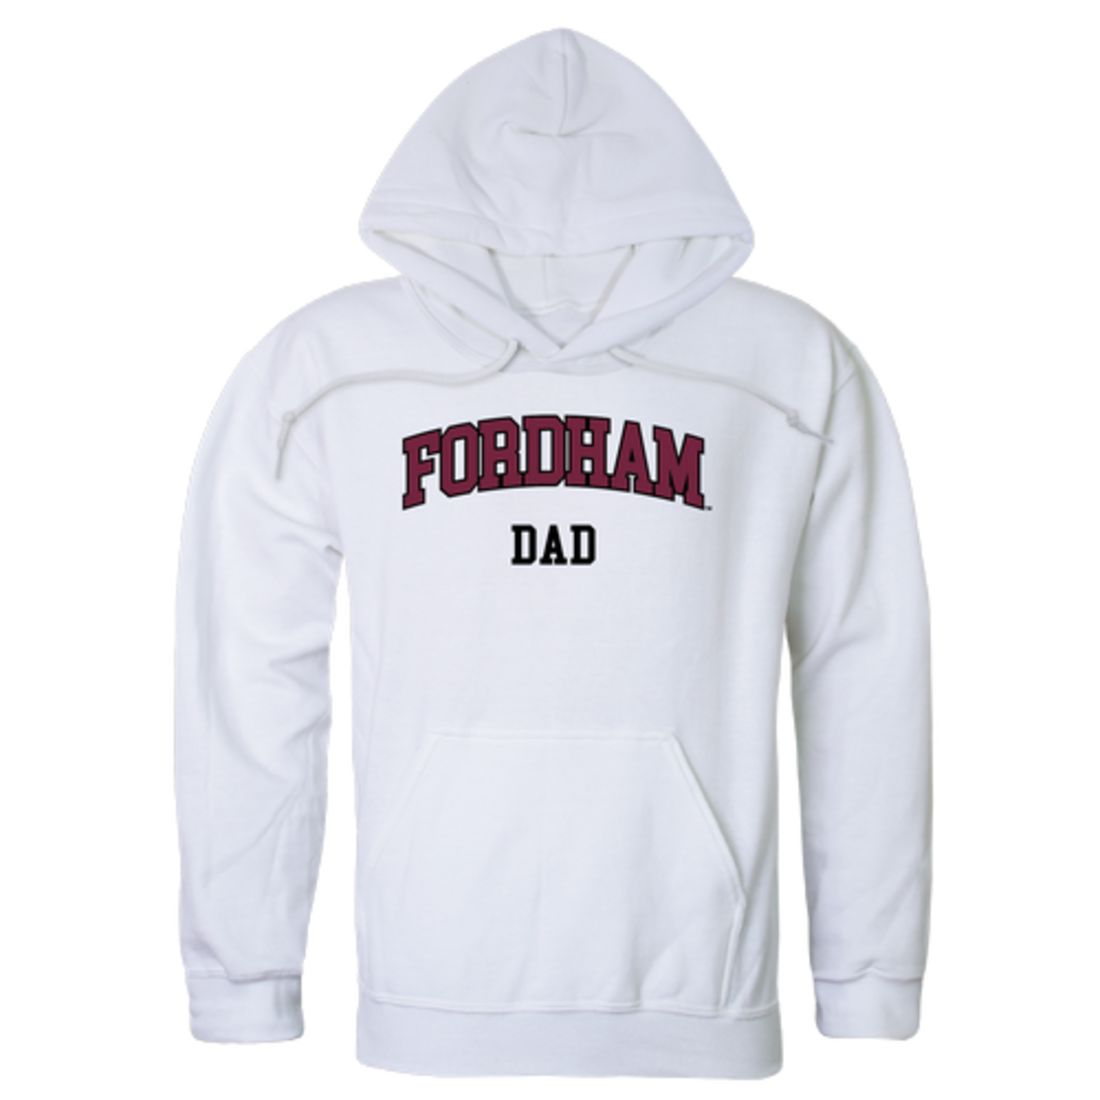 Fordham University Rams Dad Fleece Hoodie Sweatshirts Heather Grey-Campus-Wardrobe